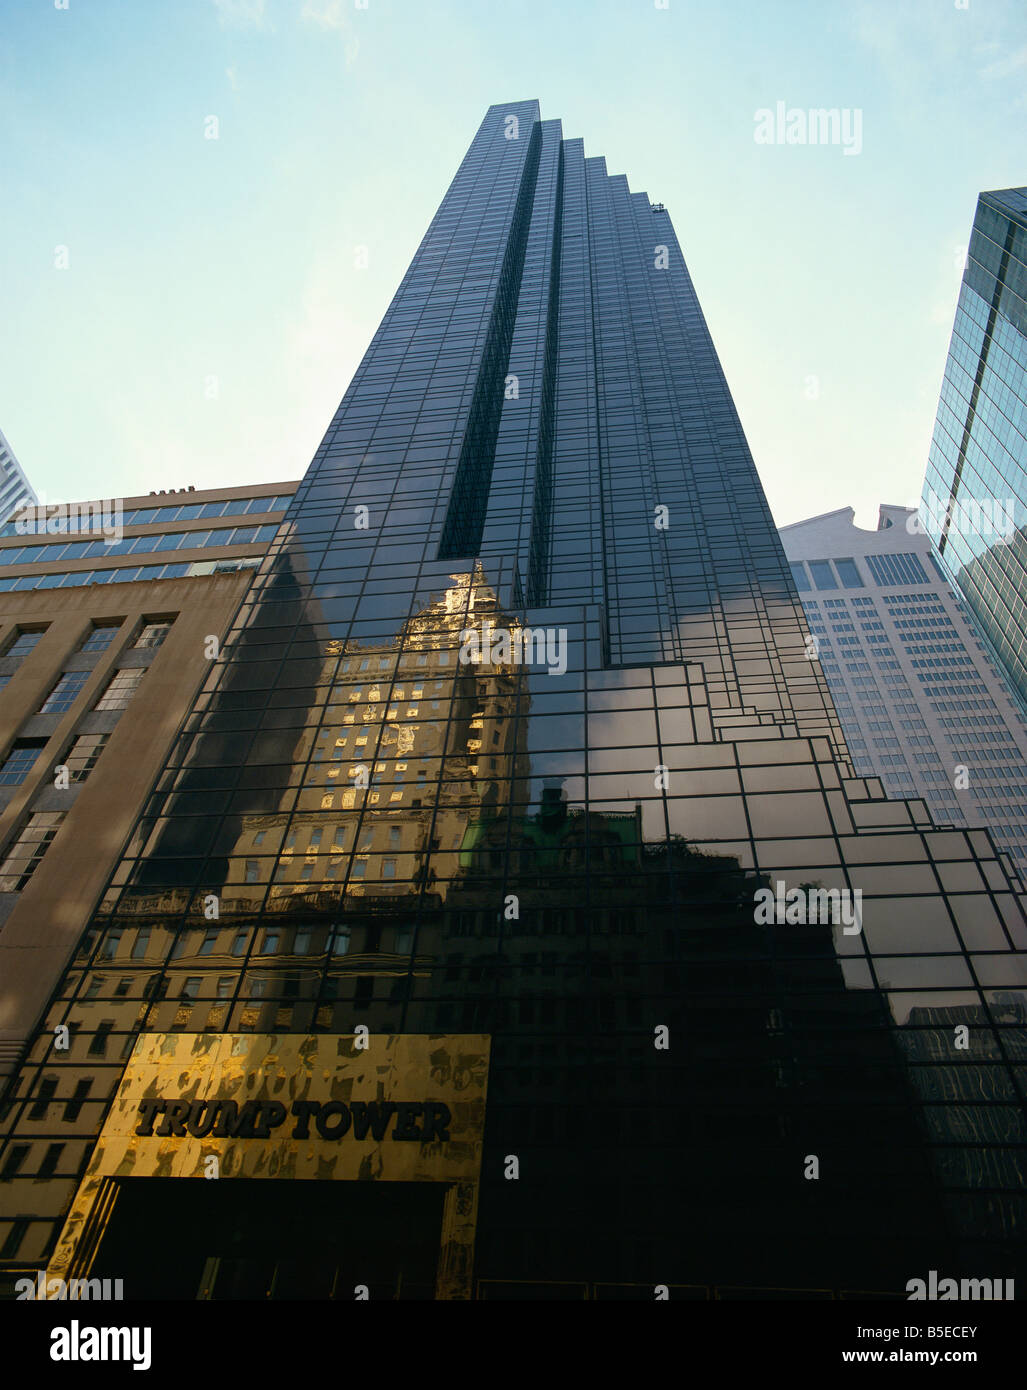 Trump Tower New York City New York United States of America North America Stock Photo